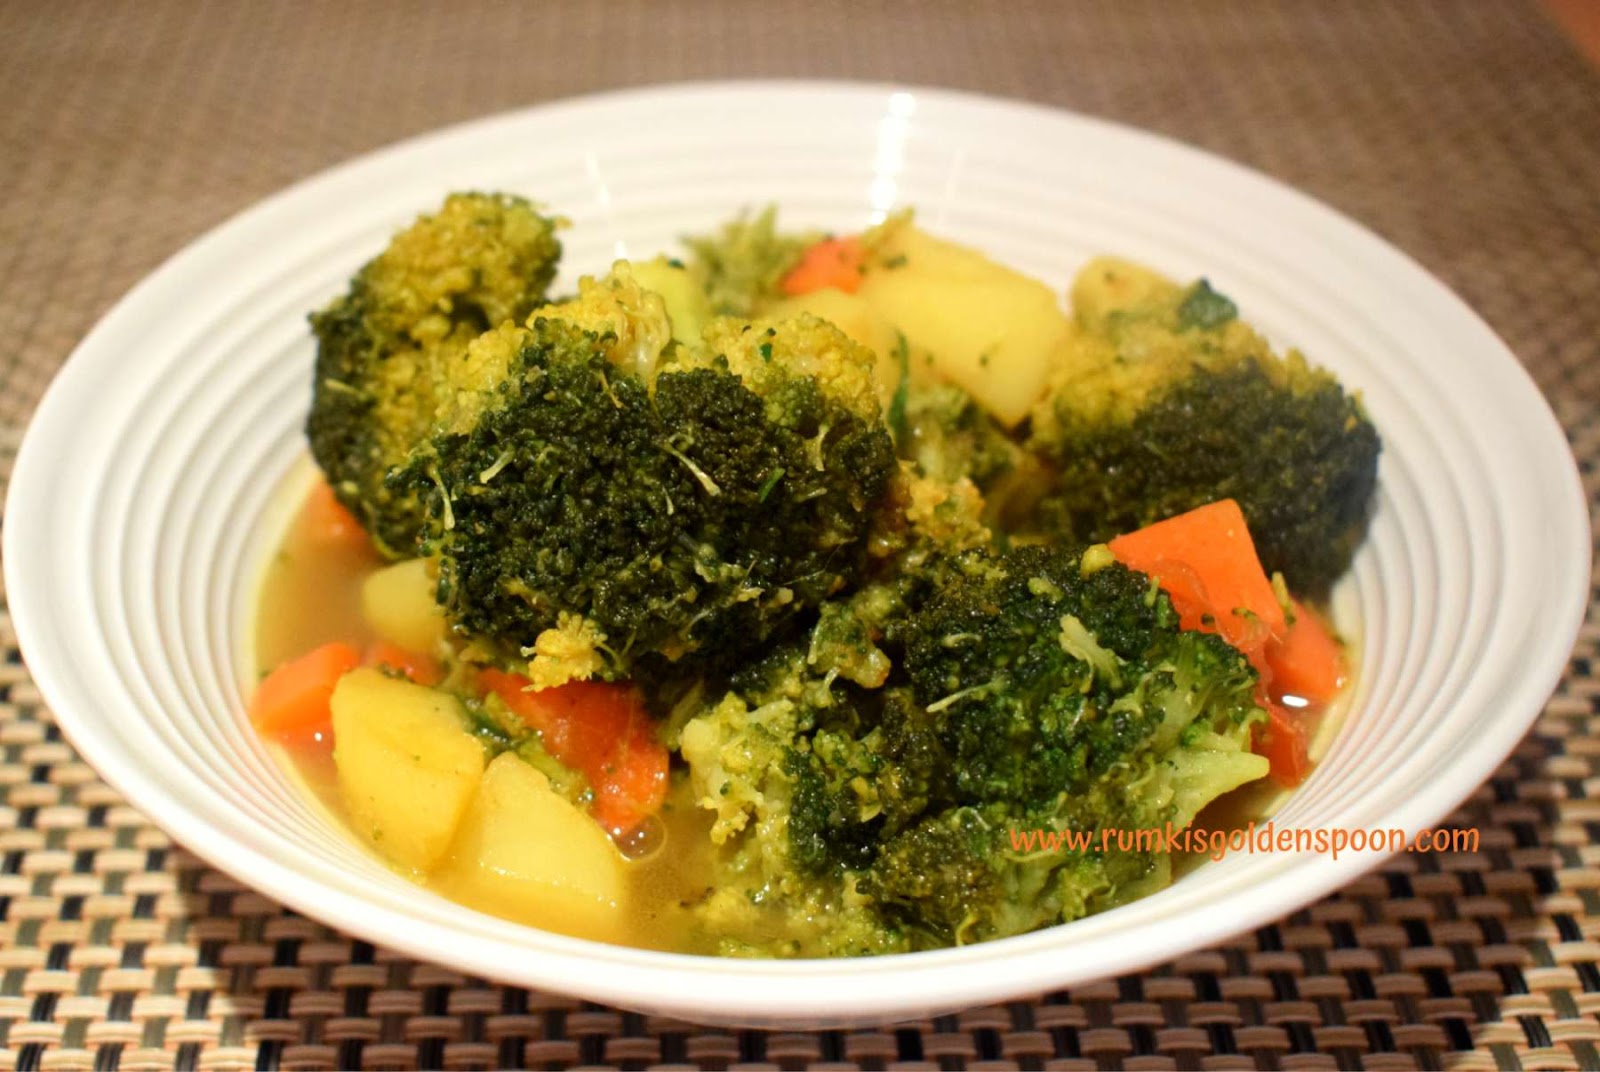 Indian Recipe, Vegan, Vegetarian, Aloo-Broccoli Ki Sabzi (Potato-Broccoli Curry), Quick and Easy, Rumki's Golden Spoon, Healthy Recipe